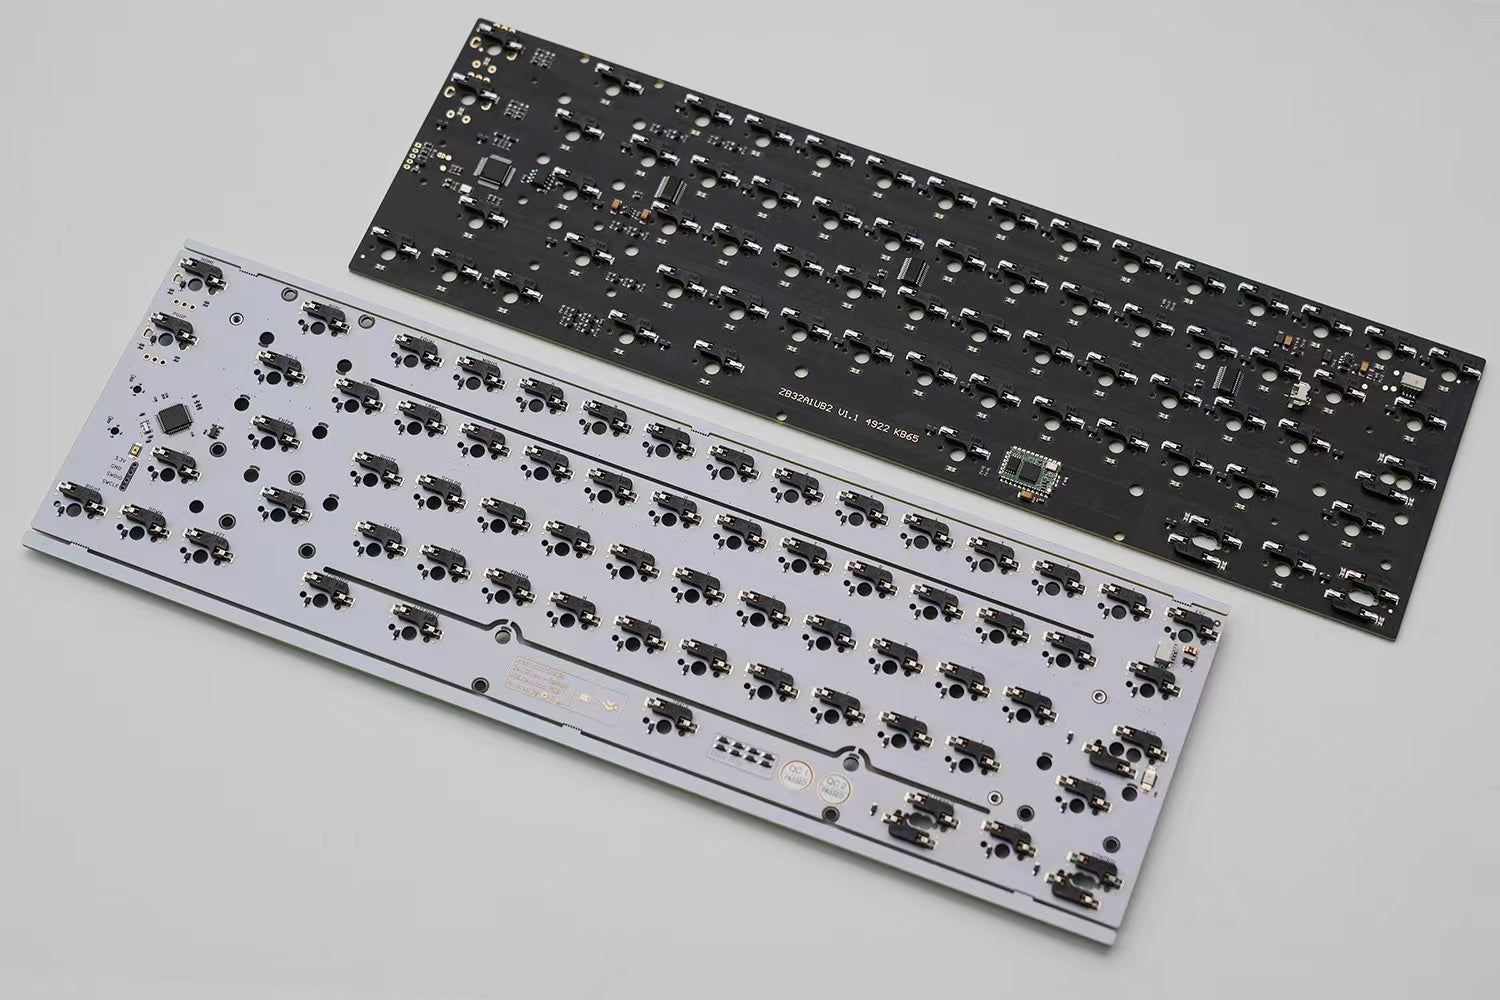 [Group Buy]  // New Retro #66 // 65% keyboard set